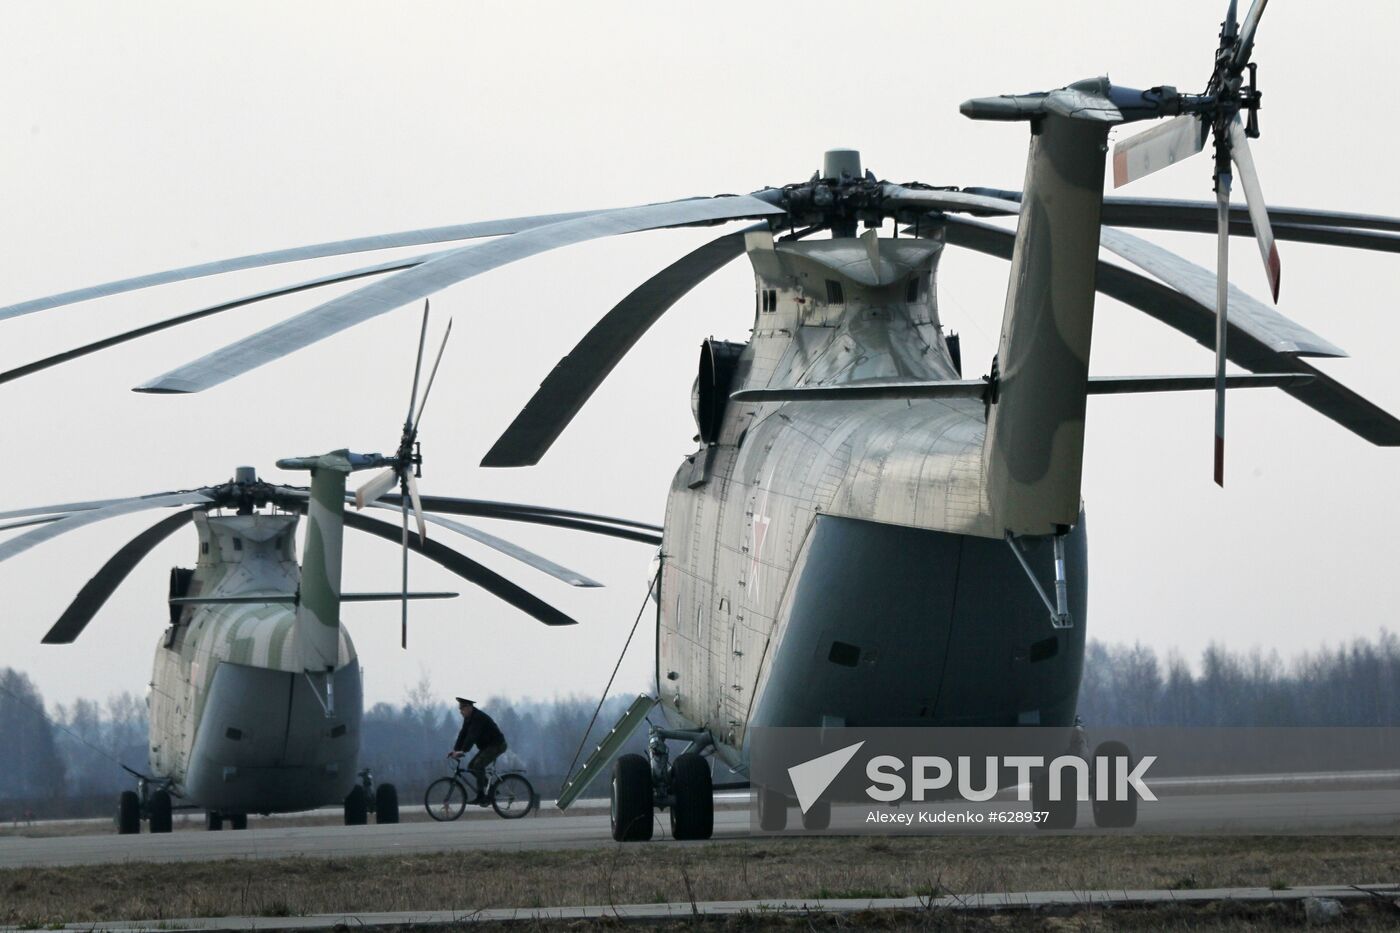 Mi-26 heavy-lift helicopter